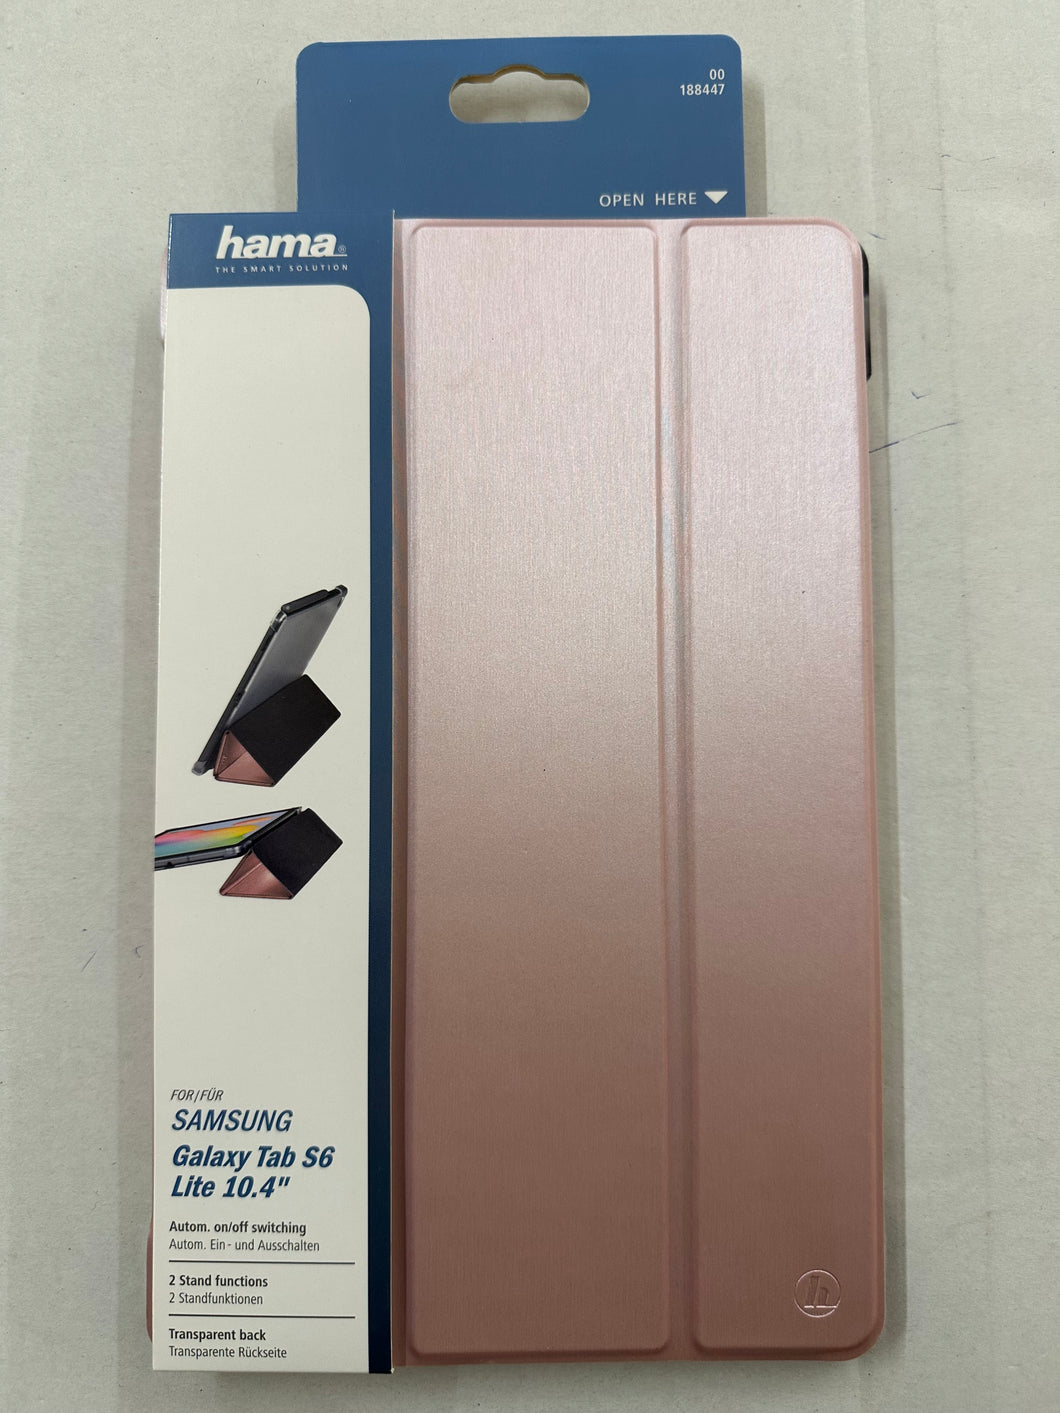 Hama 00188447 FlipCase Samsung Galaxy Tab S6 Lite Tablet-Cover,10.4